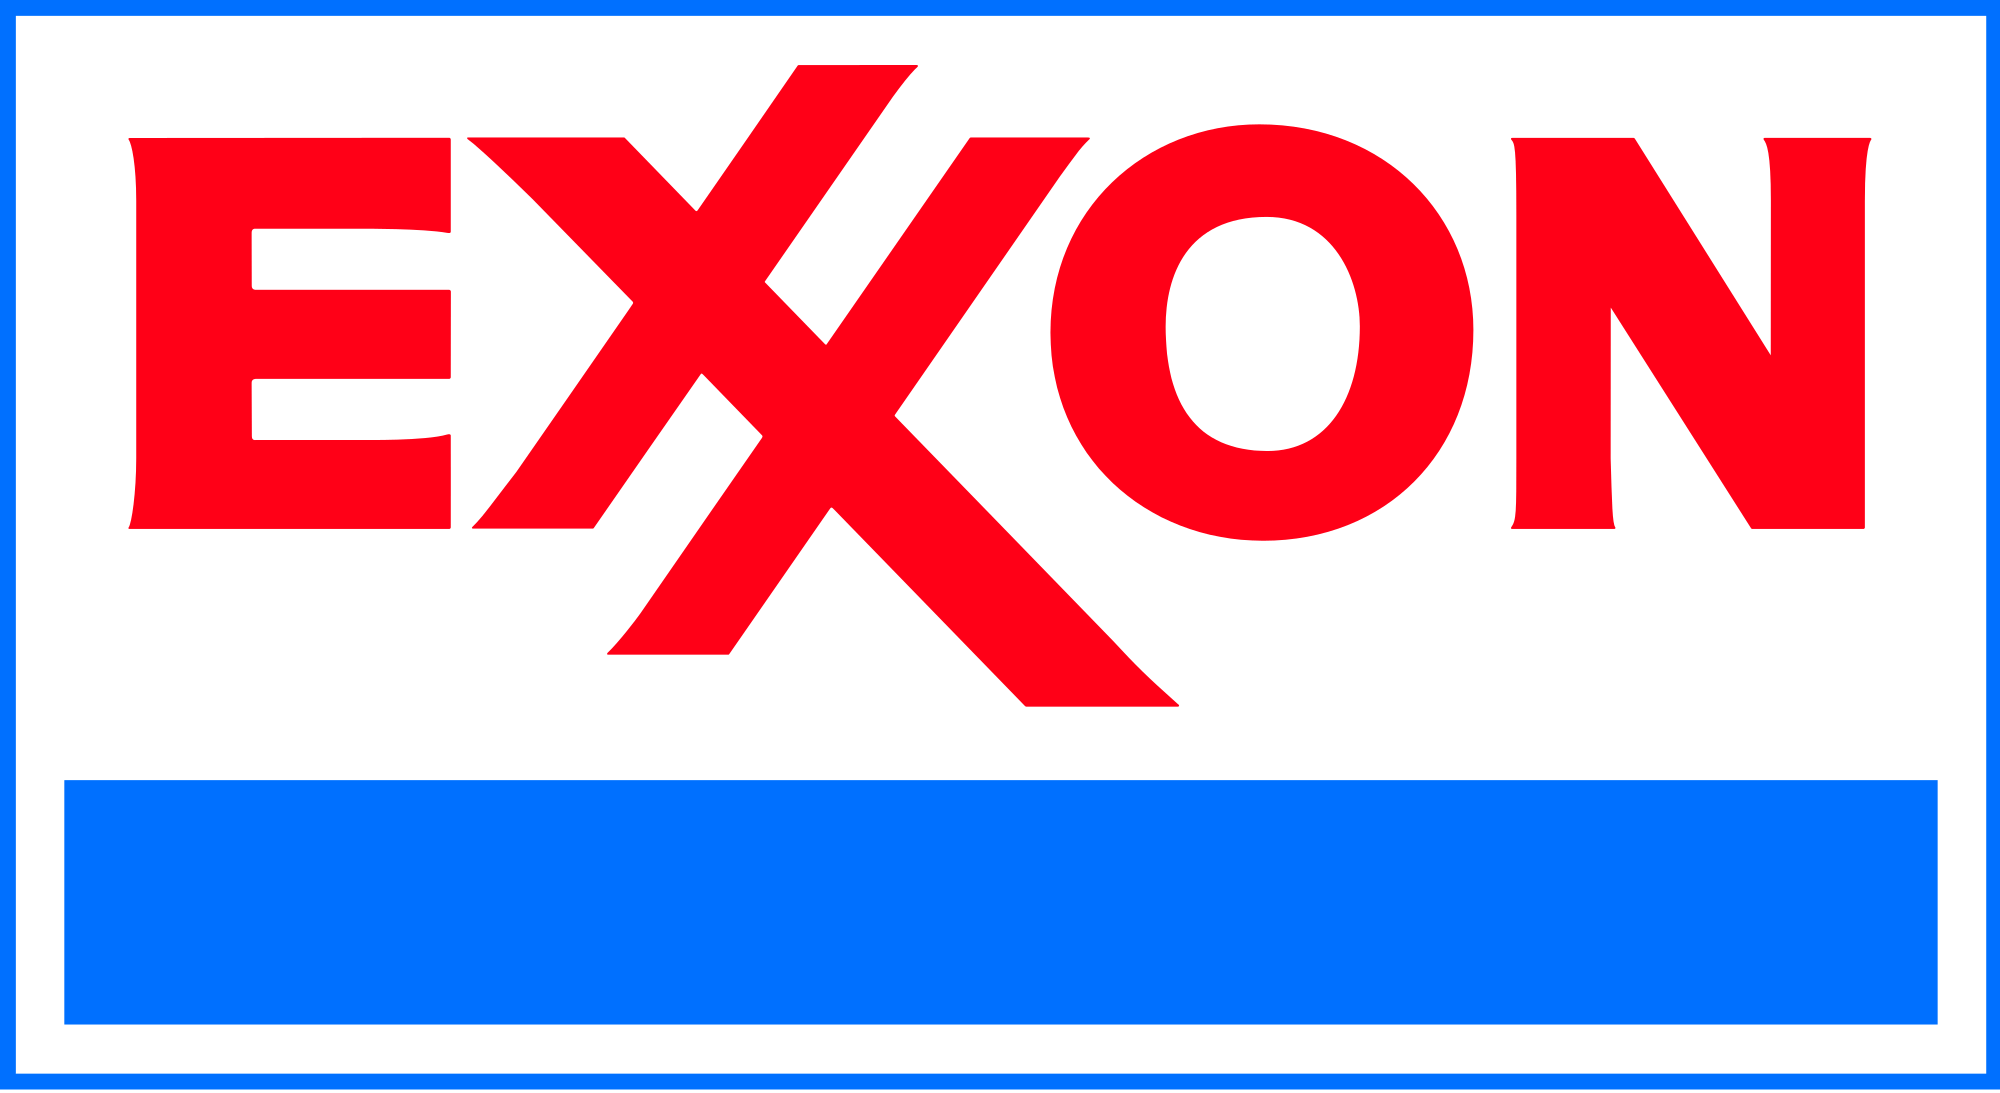 Exxon Logo - File:Exxon logo.svg - Wikimedia Commons